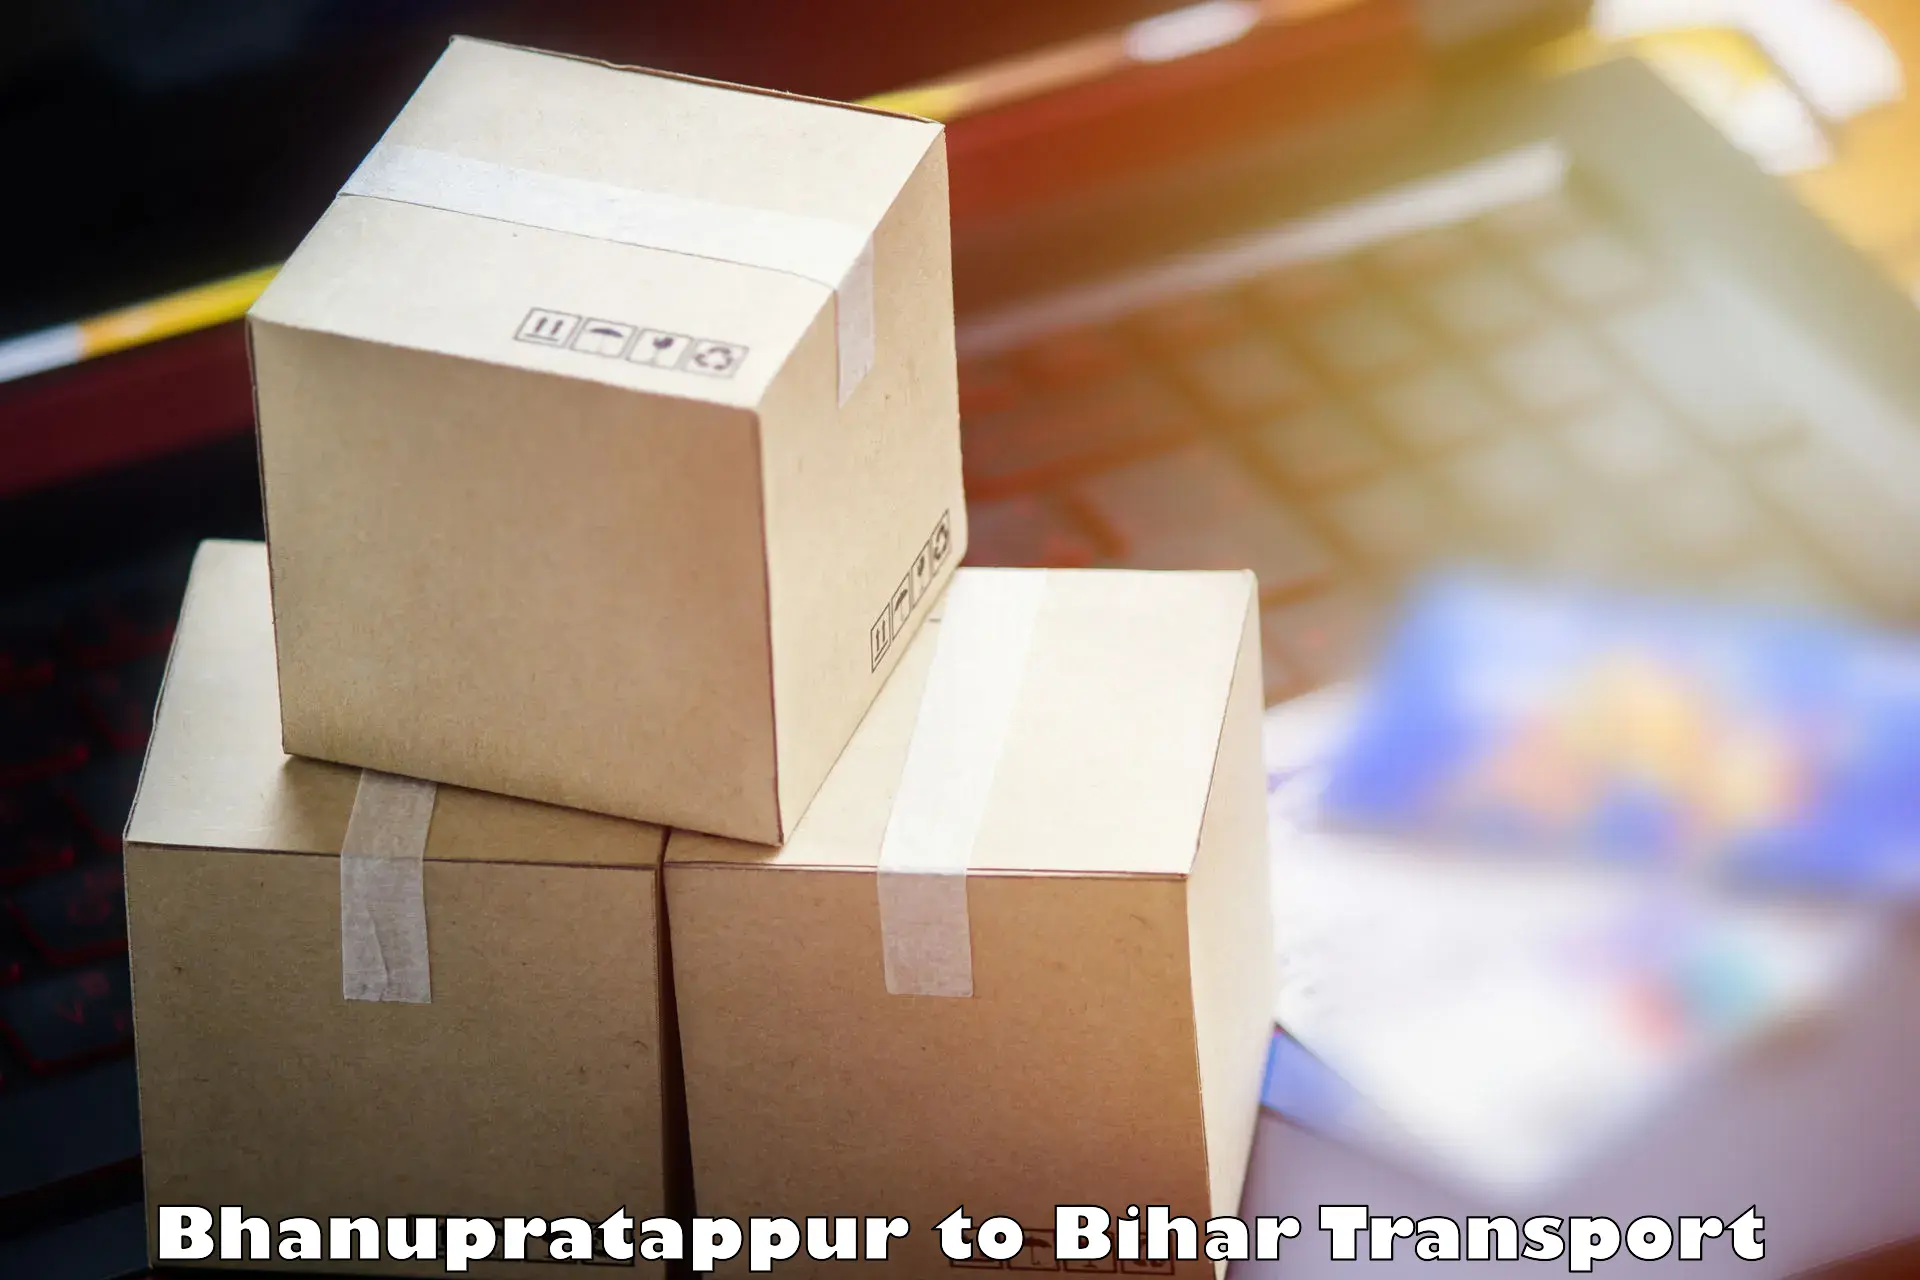 Shipping partner Bhanupratappur to Katoria